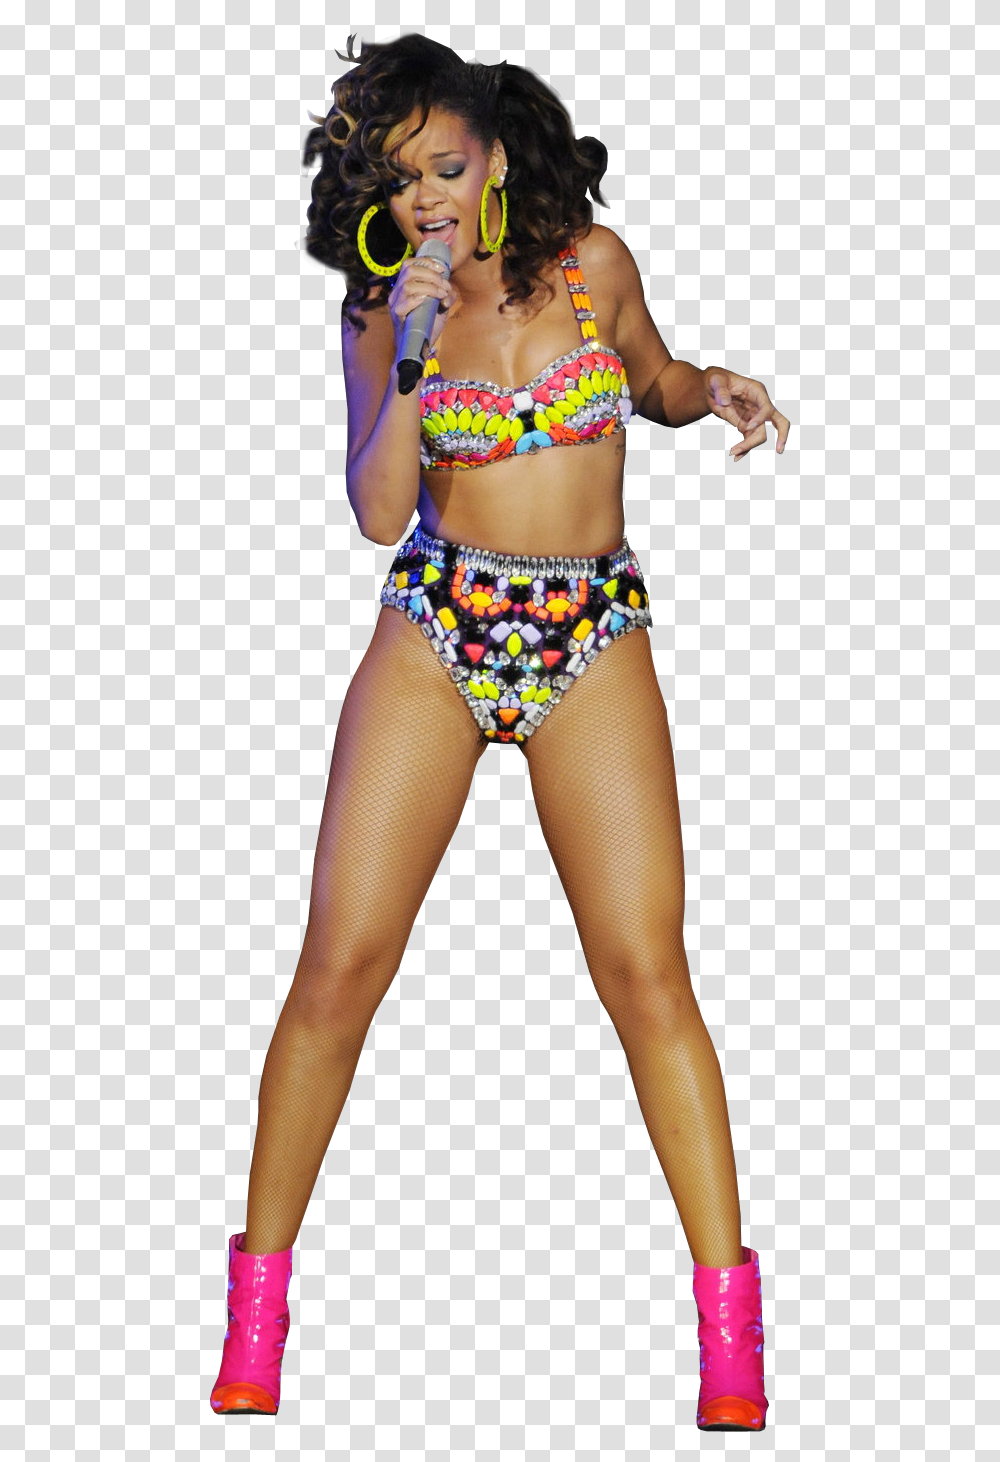 Rihanna Music Artist Image Free Rihanna, Clothing, Person, Swimwear, Bikini Transparent Png